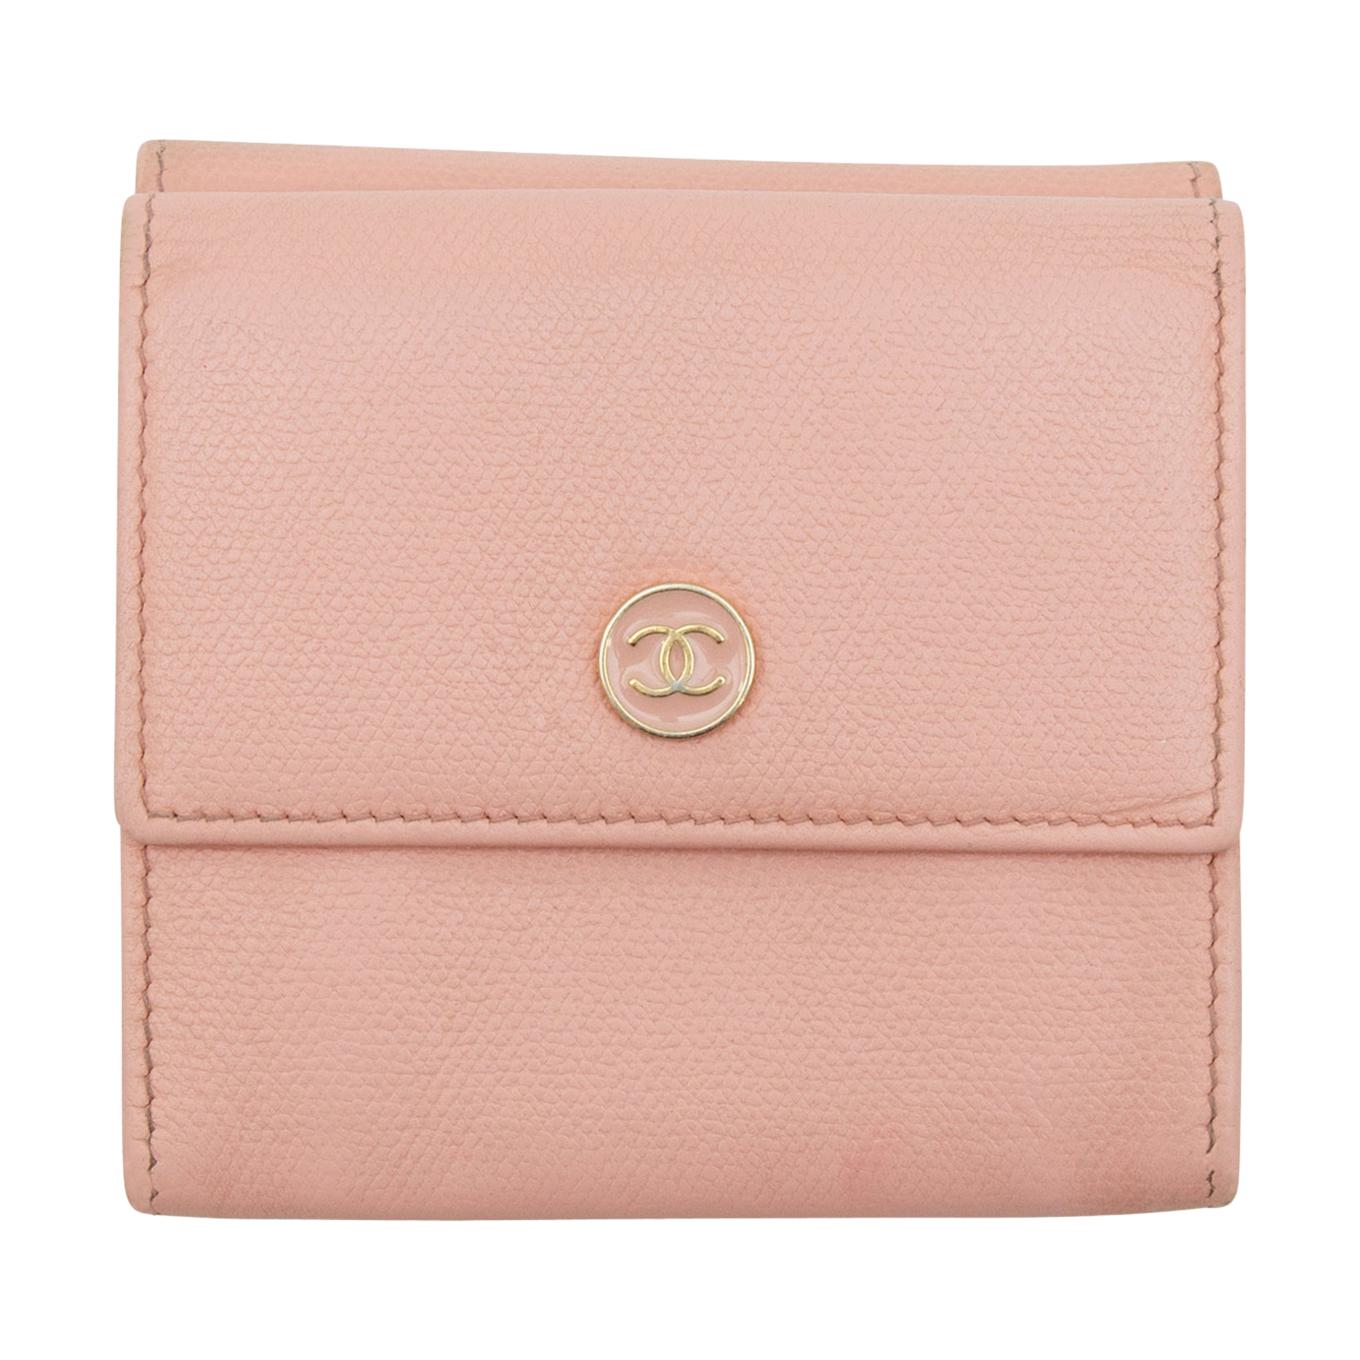 Chanel Pink Leather Sevruga Wallet